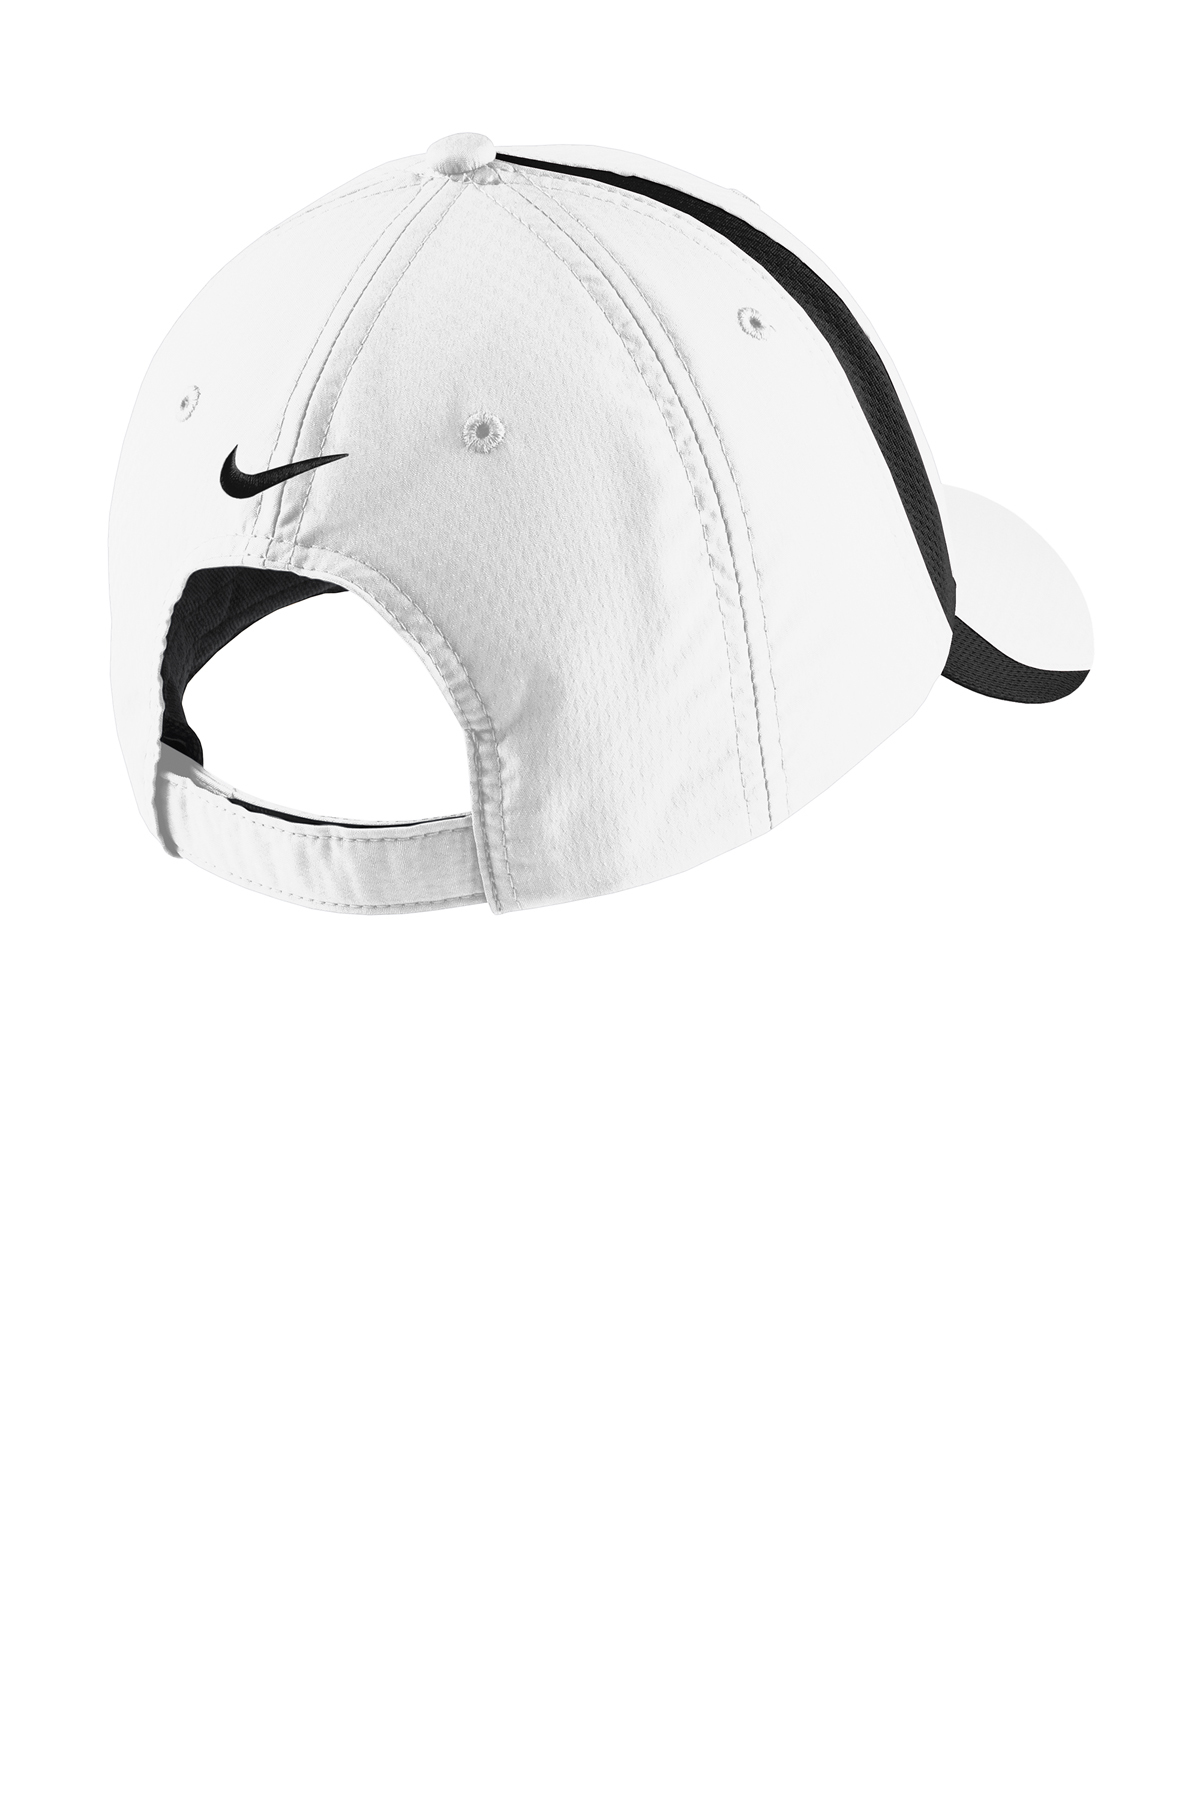 Nike Sphere Performance Cap | Product | SanMar